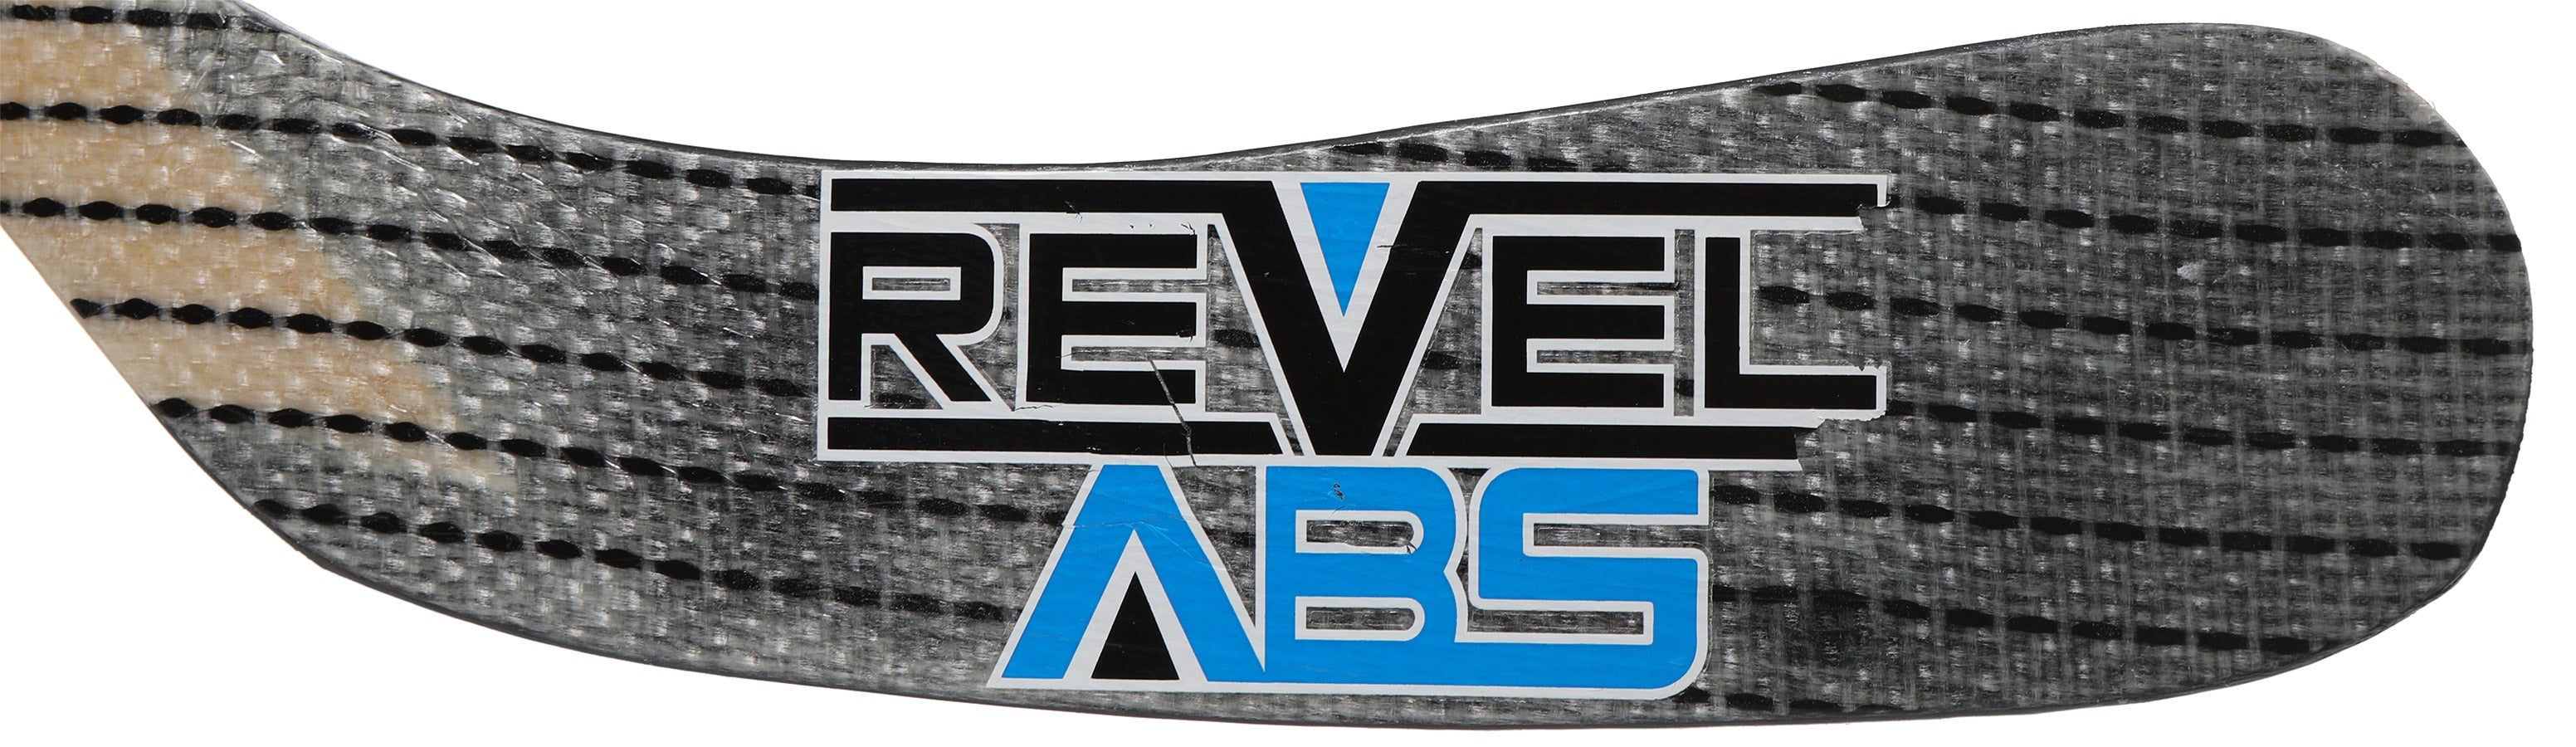 Baston Alkali Revel ABS Hockey Stick Niños - Doberman's Skate Shop - Doberman's Skate Shop